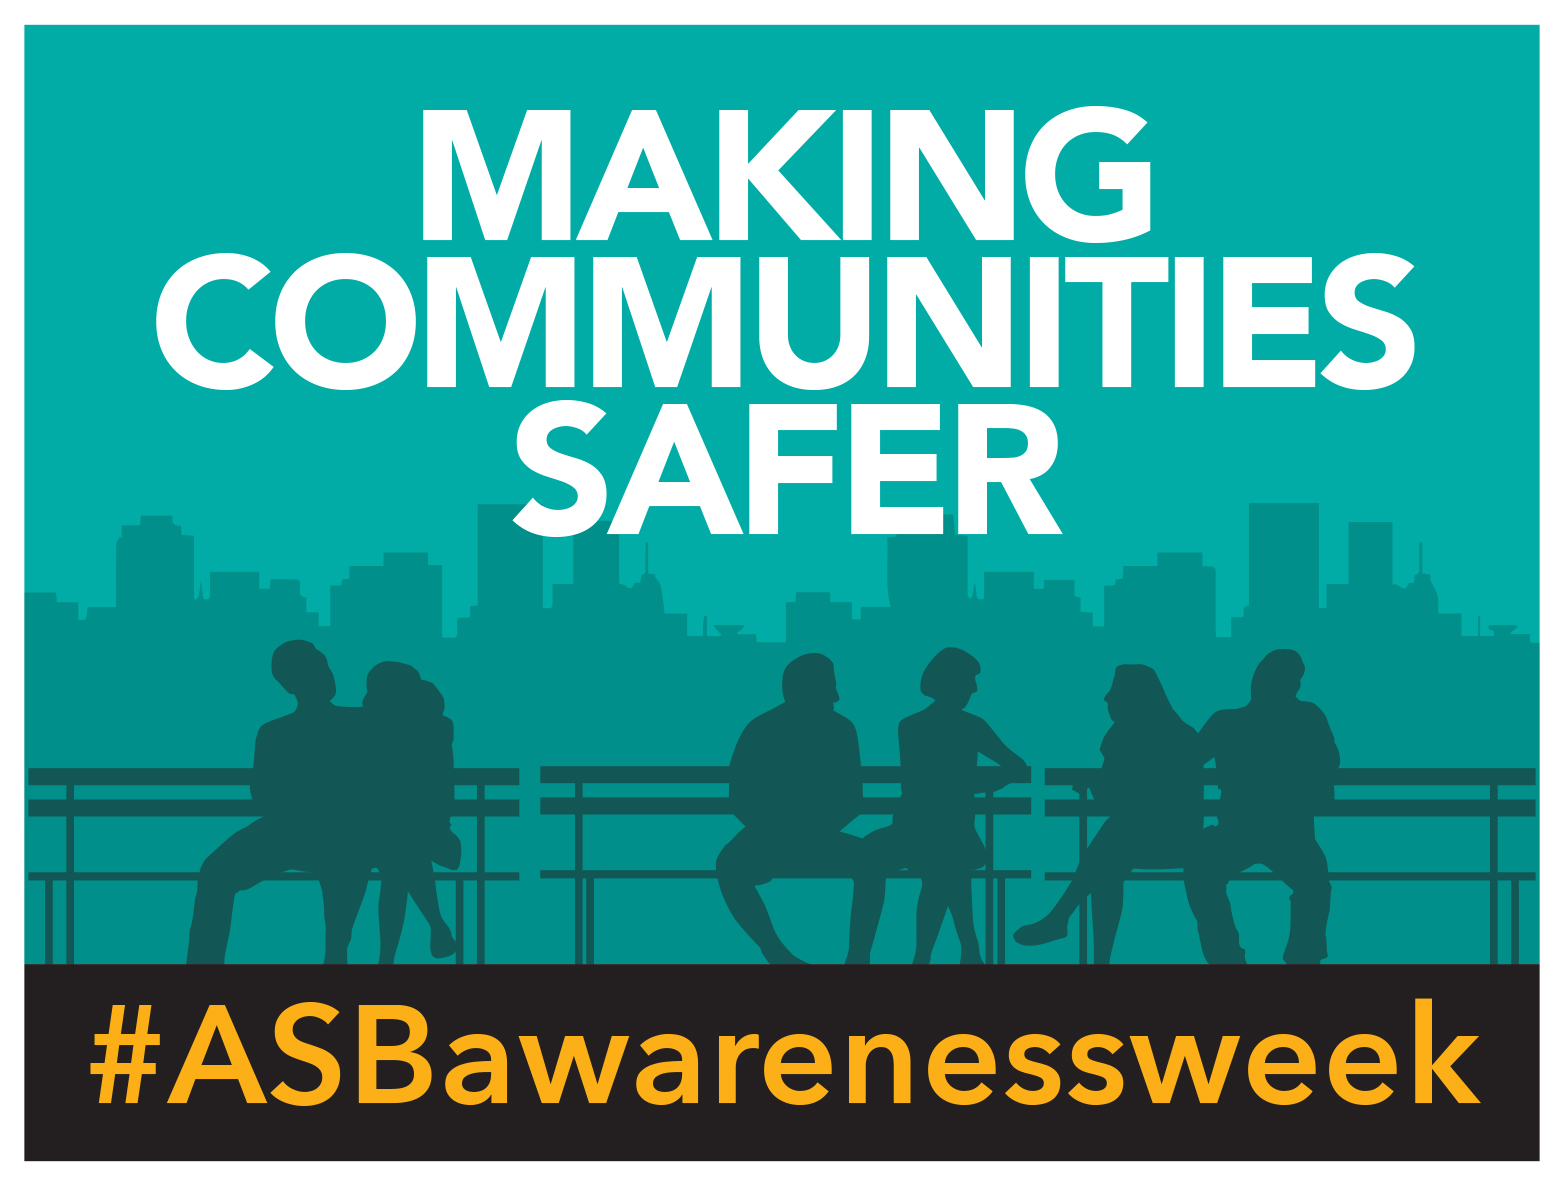 Asb awareness week graphic